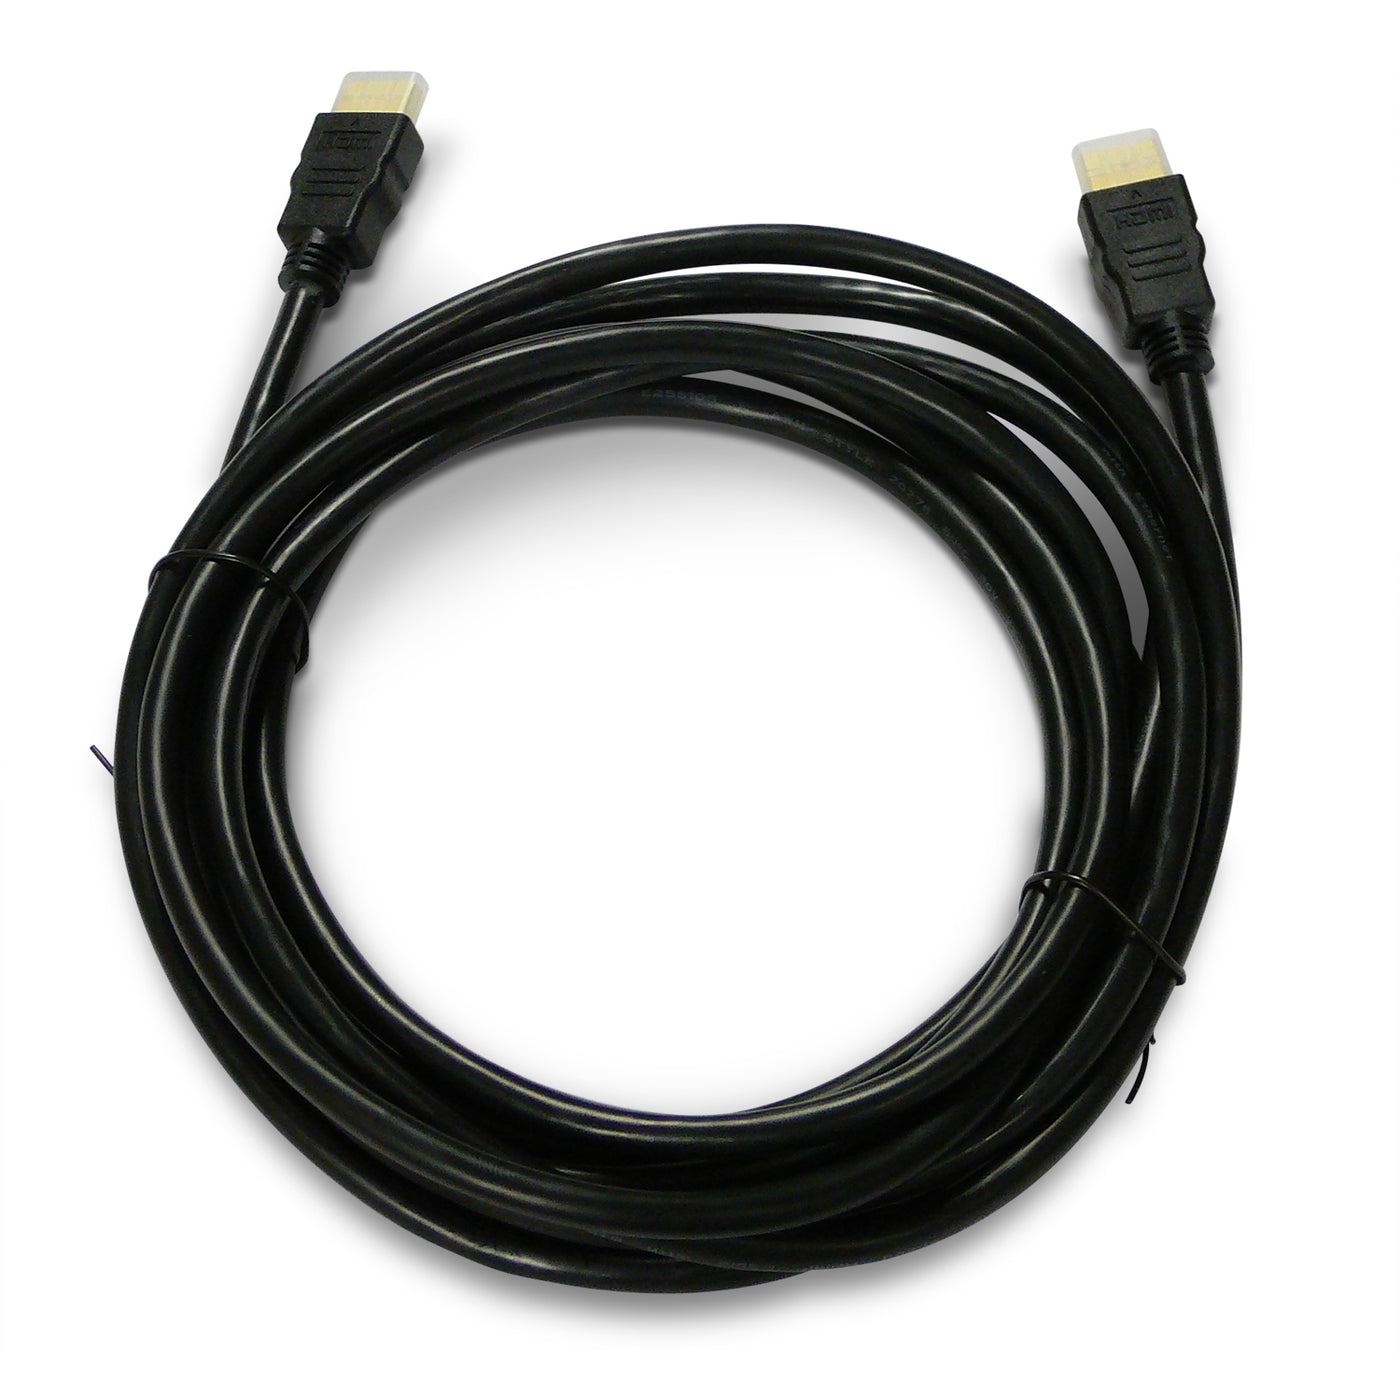 Rocelco 1.4 HDMI Cable - HD-4M